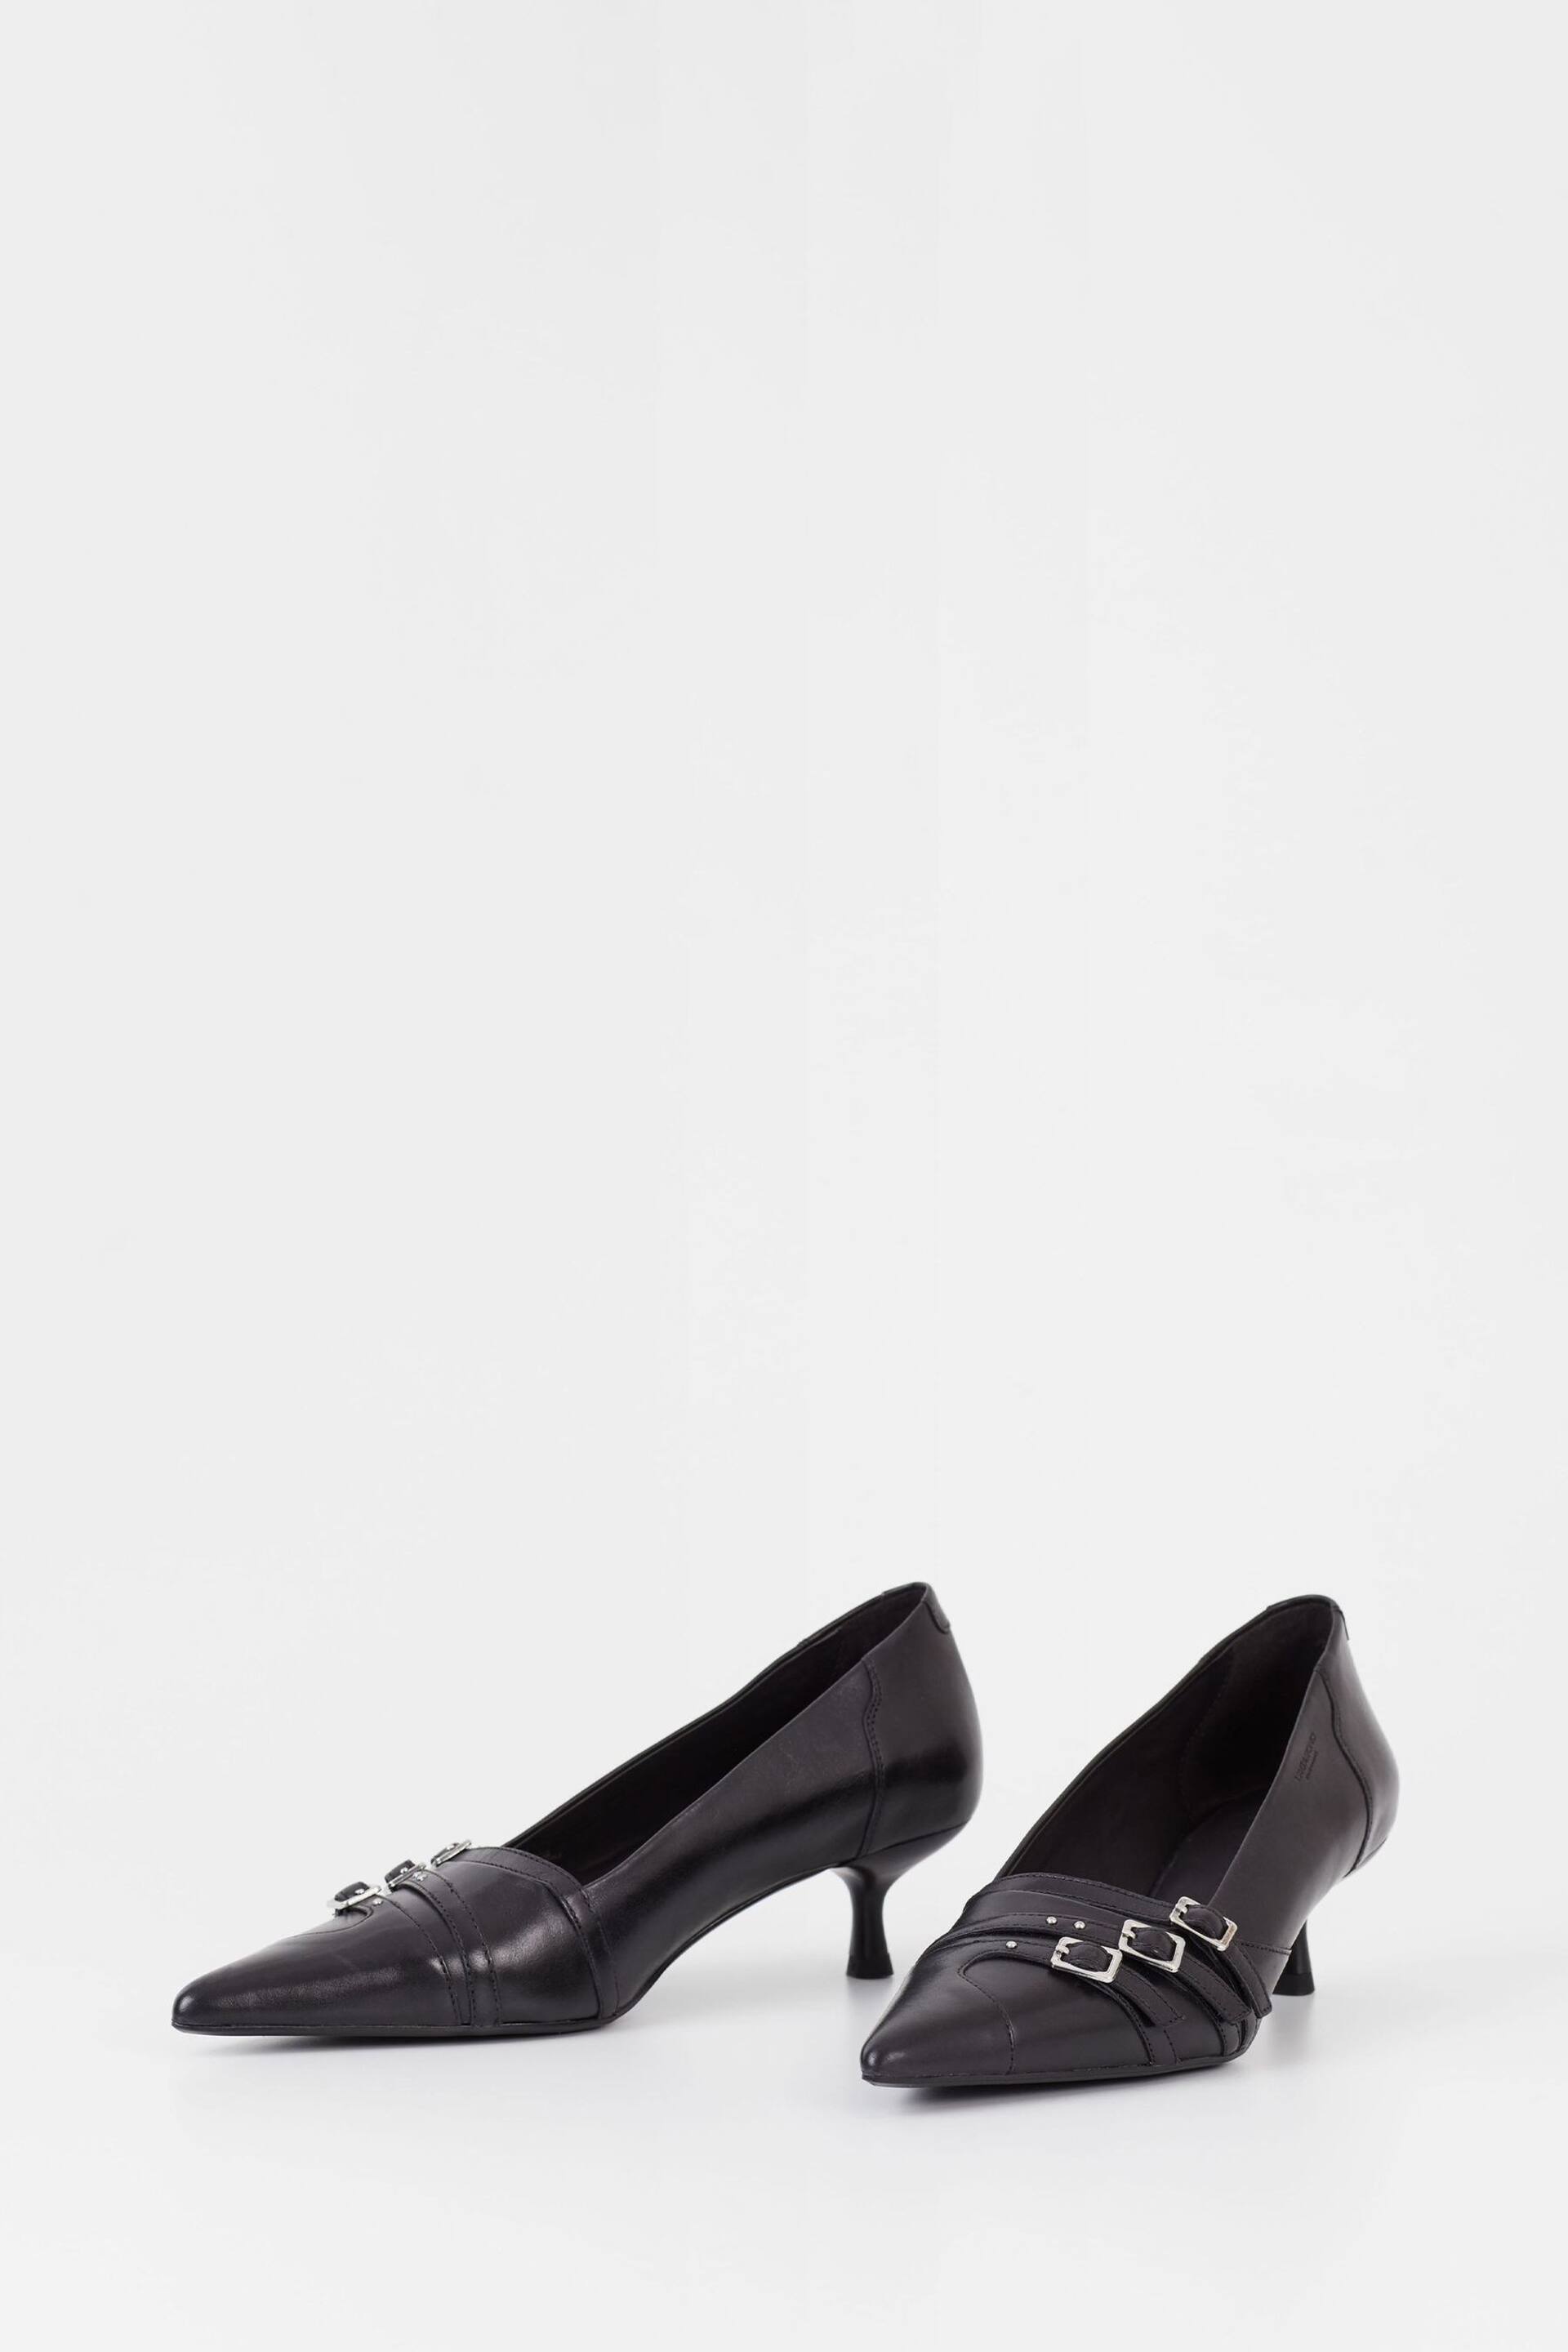 Vagabond Lykke Buckle Kitten Heel Black Shoes - Image 2 of 3